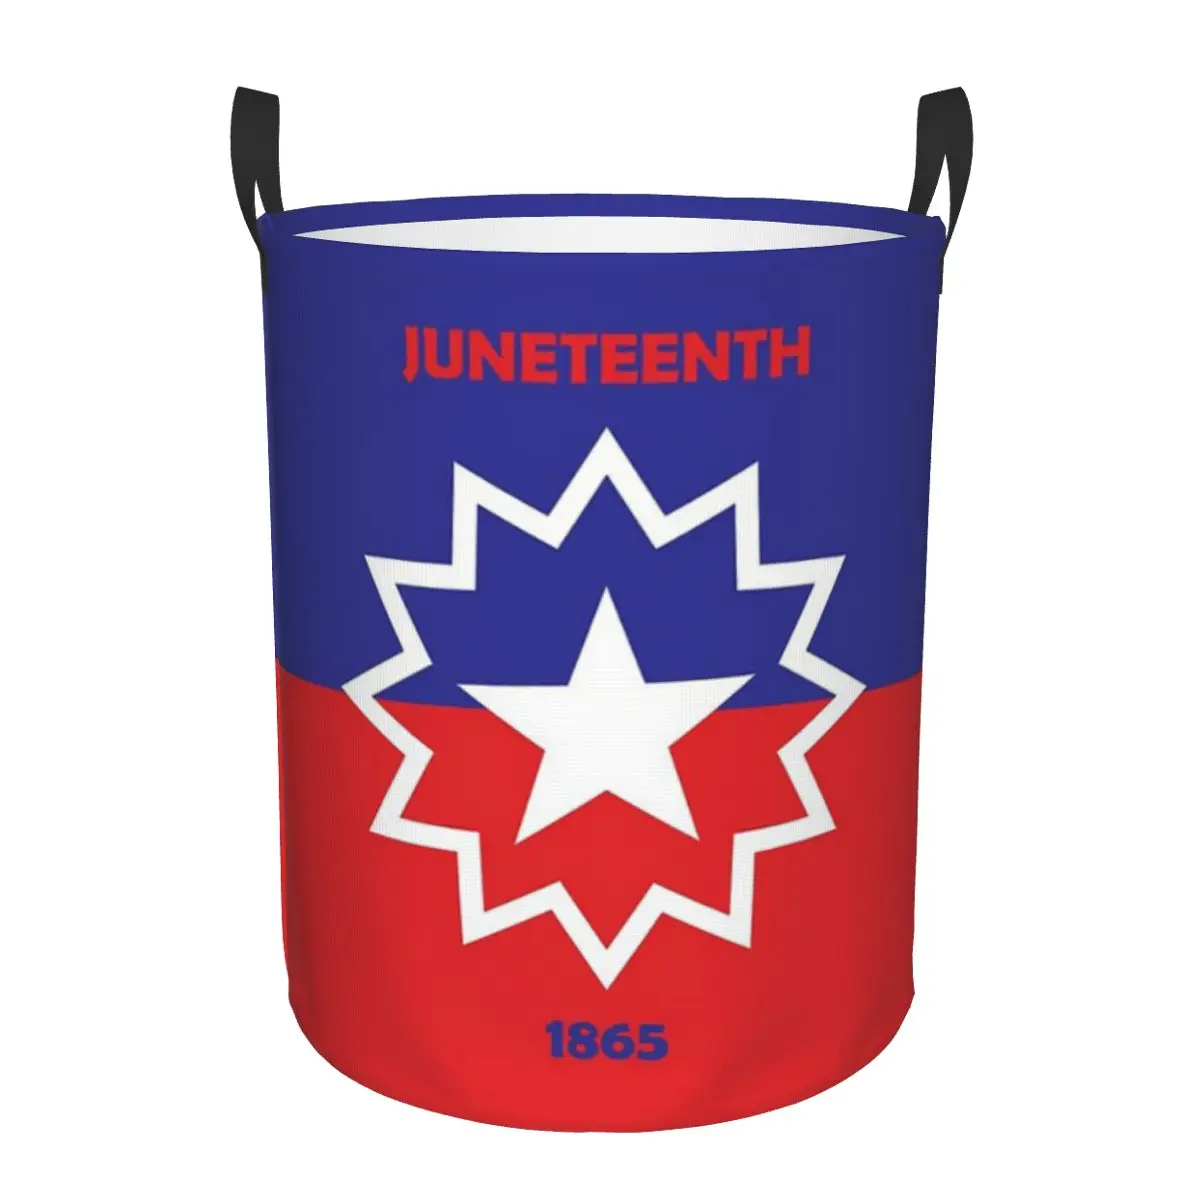 

Juneteenth Flag Circular hamper,Storage Basket Sturdy and durableGreat for kitchensStorage of clothes